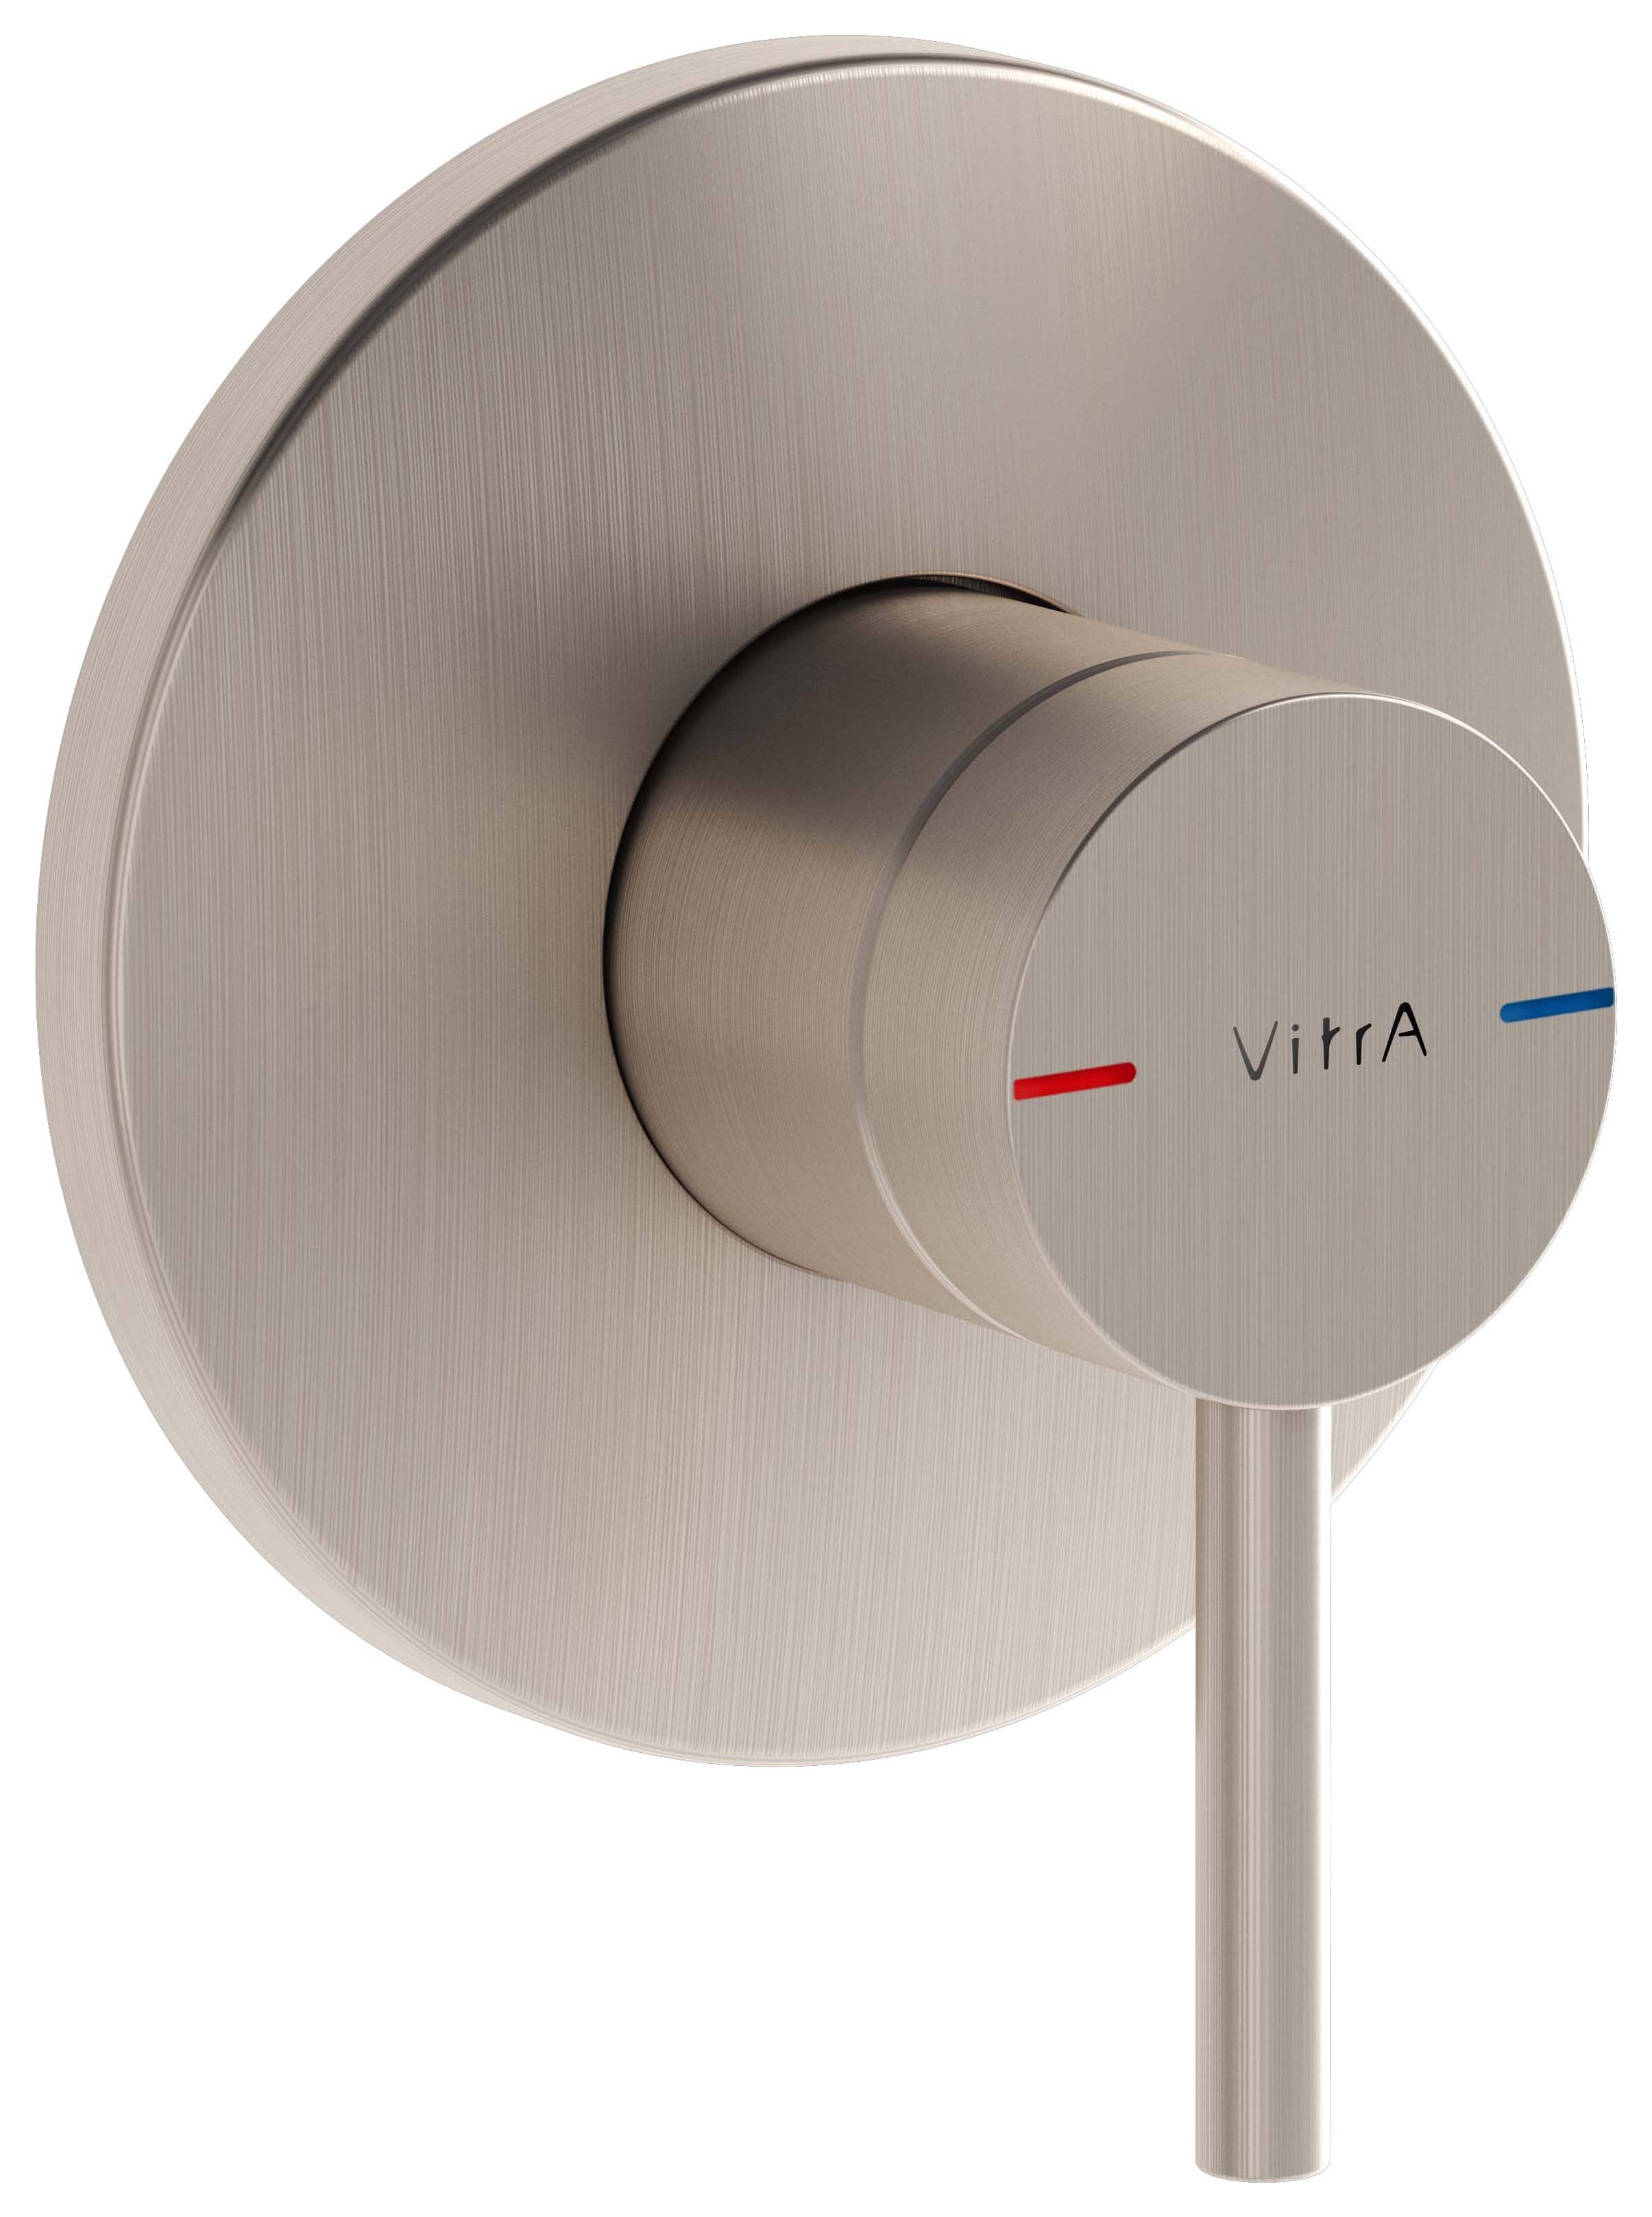 VitrA Origin Round Built-In 1 Way Exposed Shower Mixer Valve - Brushed Nickel